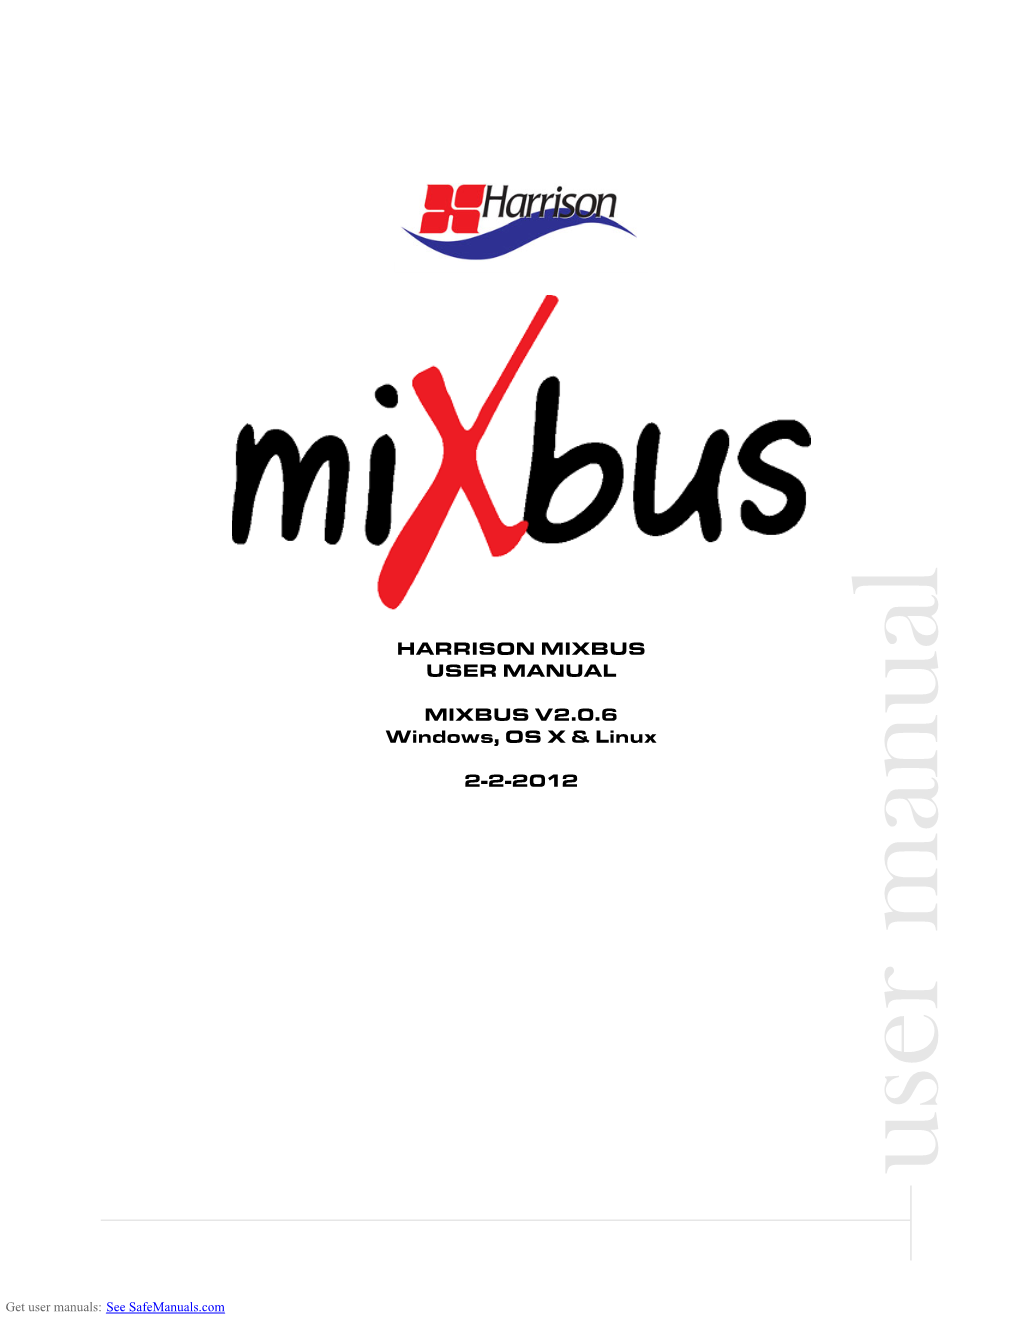 Harrison Mixbus User Manual Mixbus V2